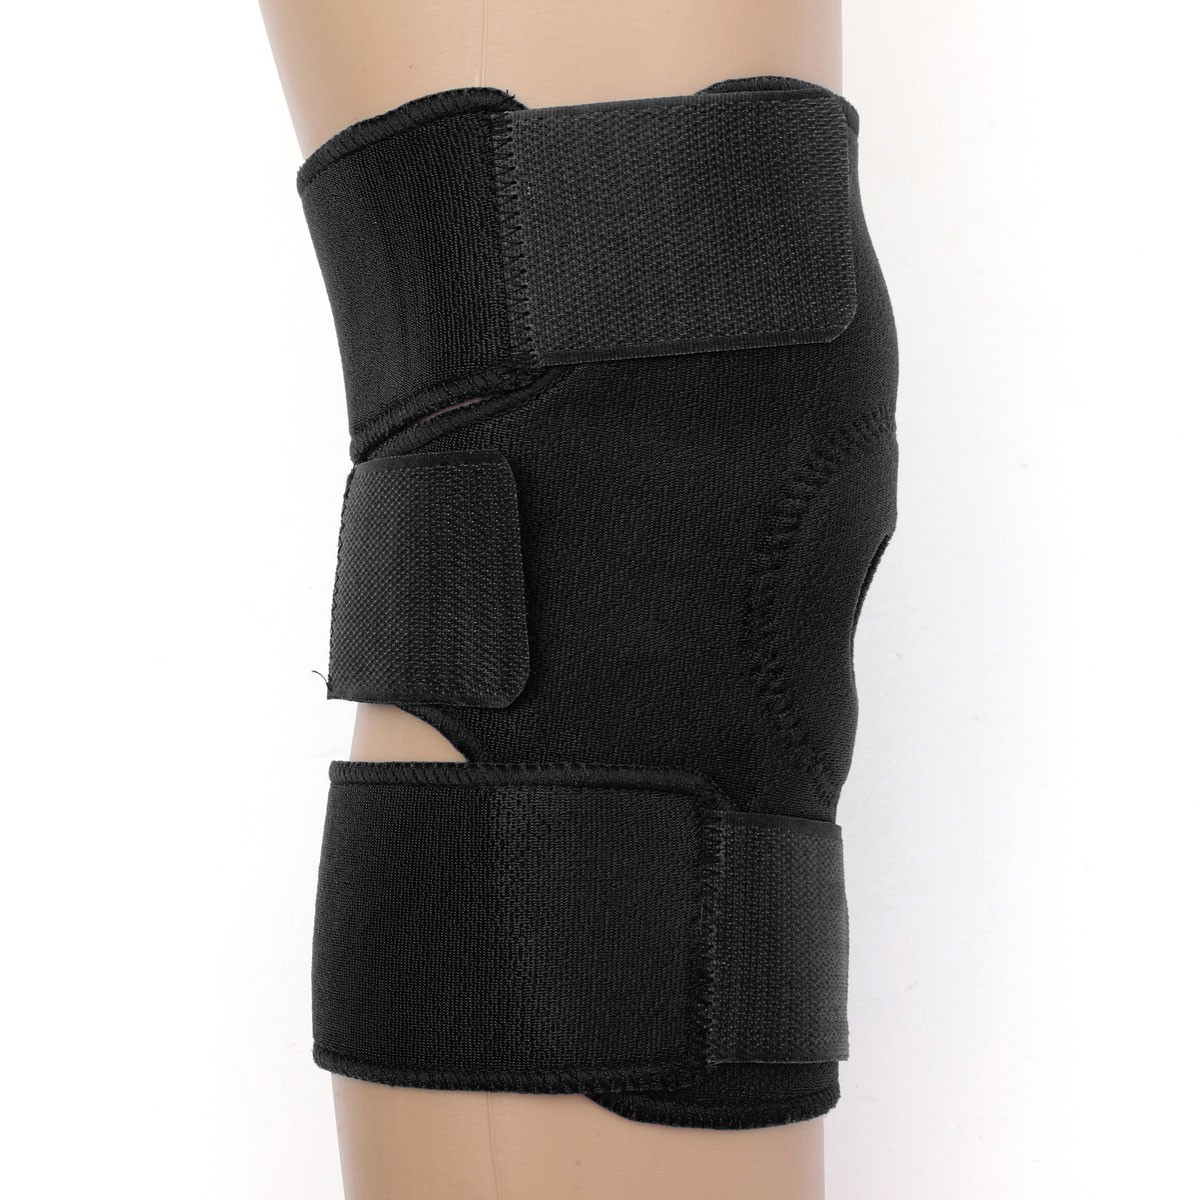 

Neoprene Patella Brace Knee Support Strap Adjustable Protector